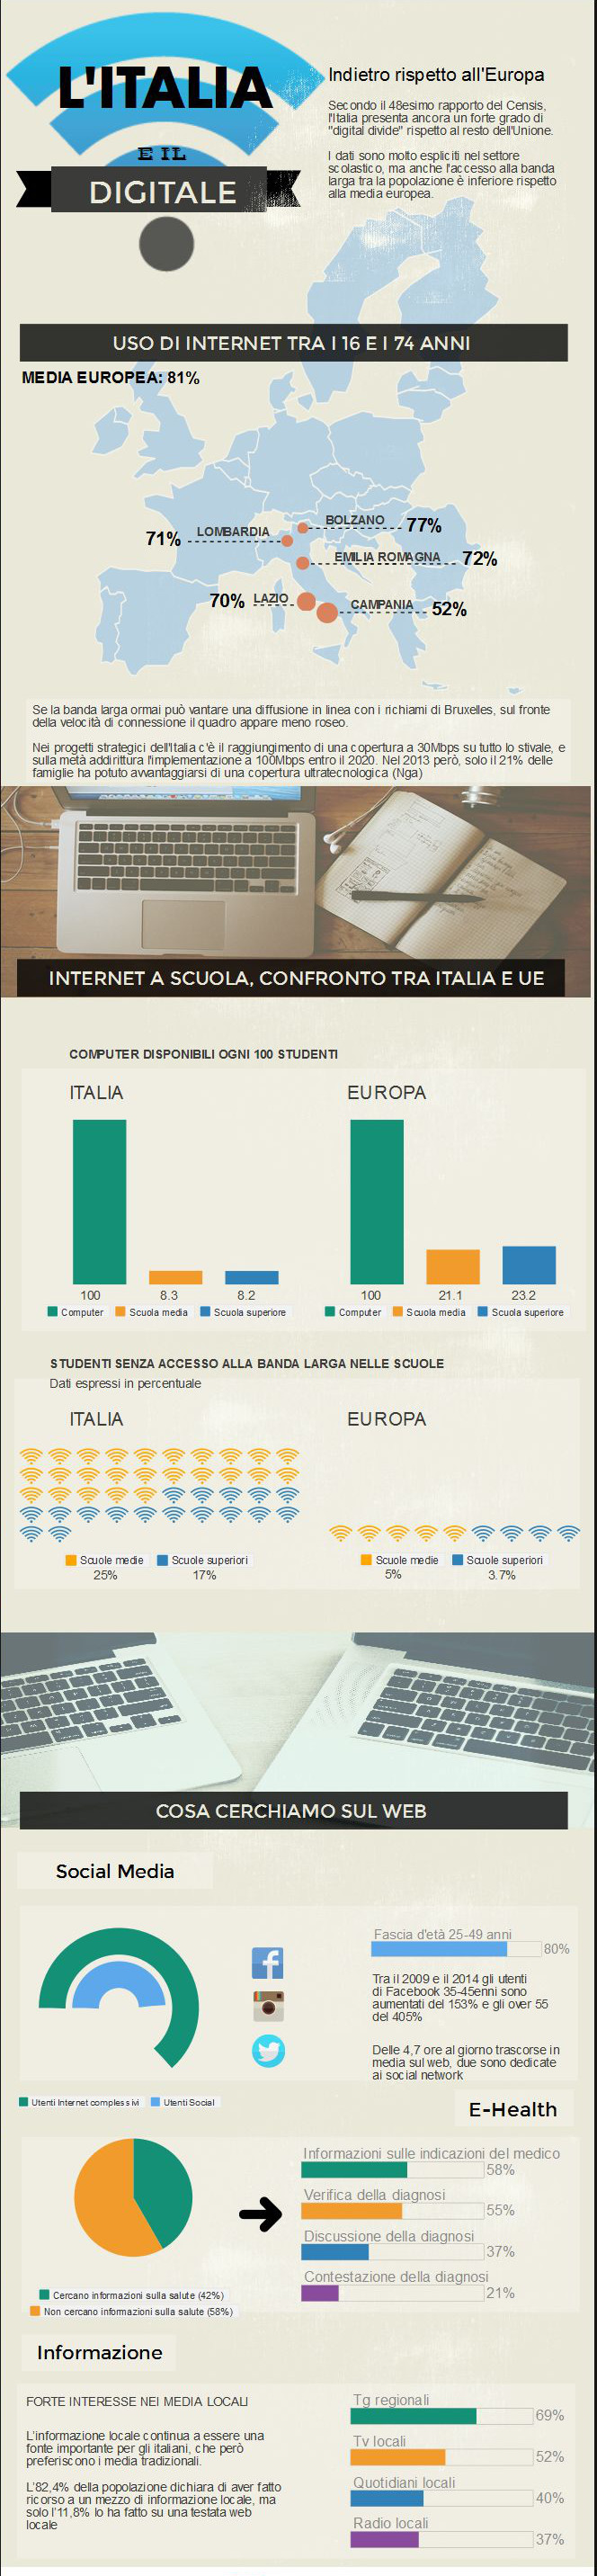 infografica-censis-2014